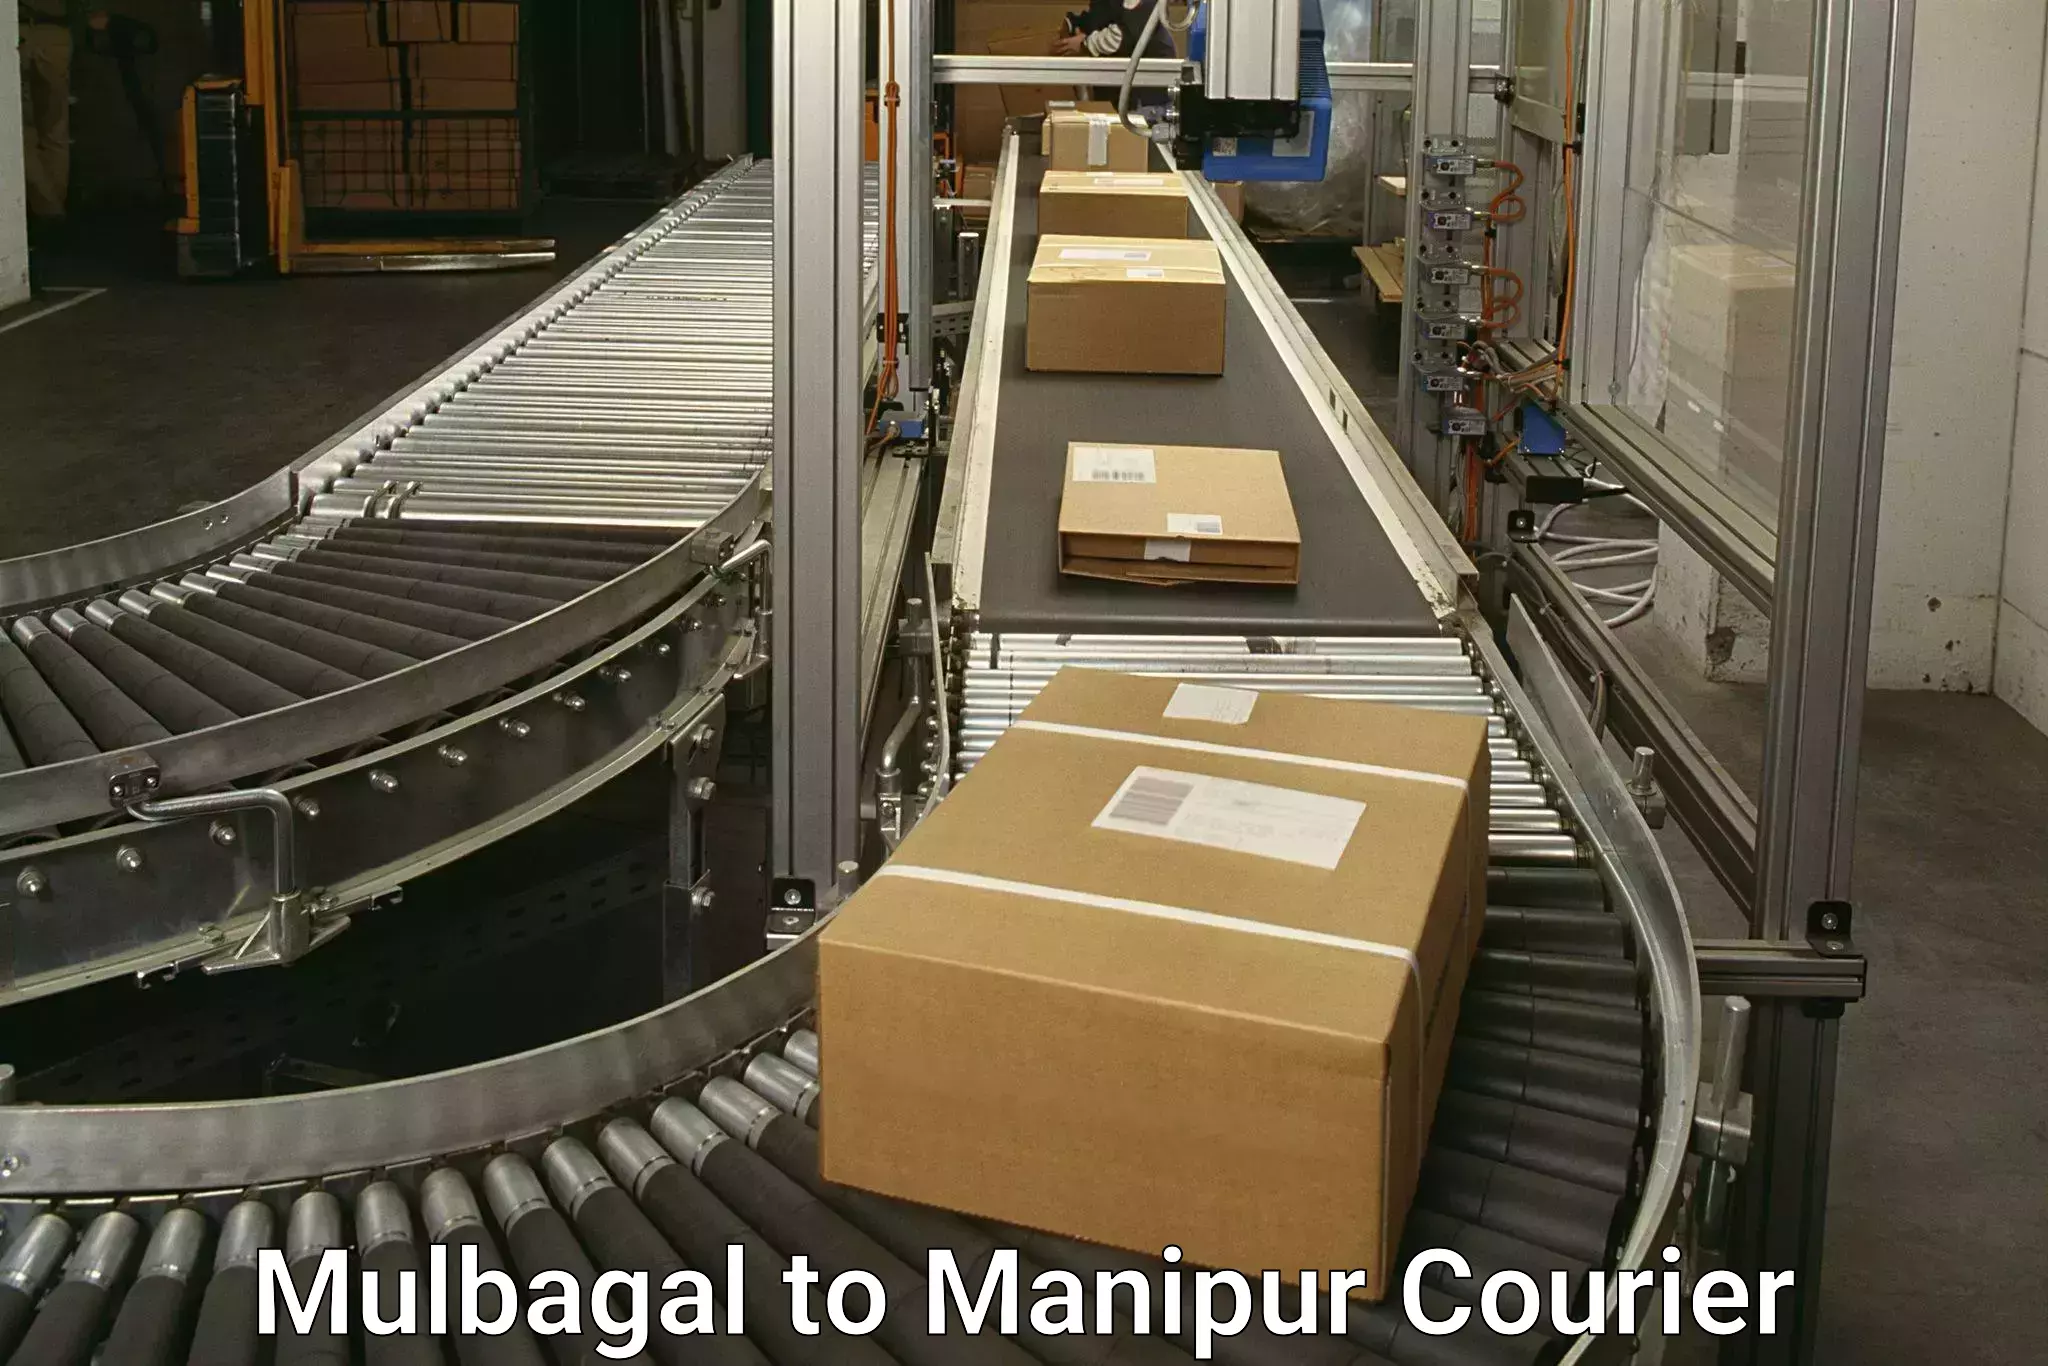 Digital courier platforms Mulbagal to Manipur